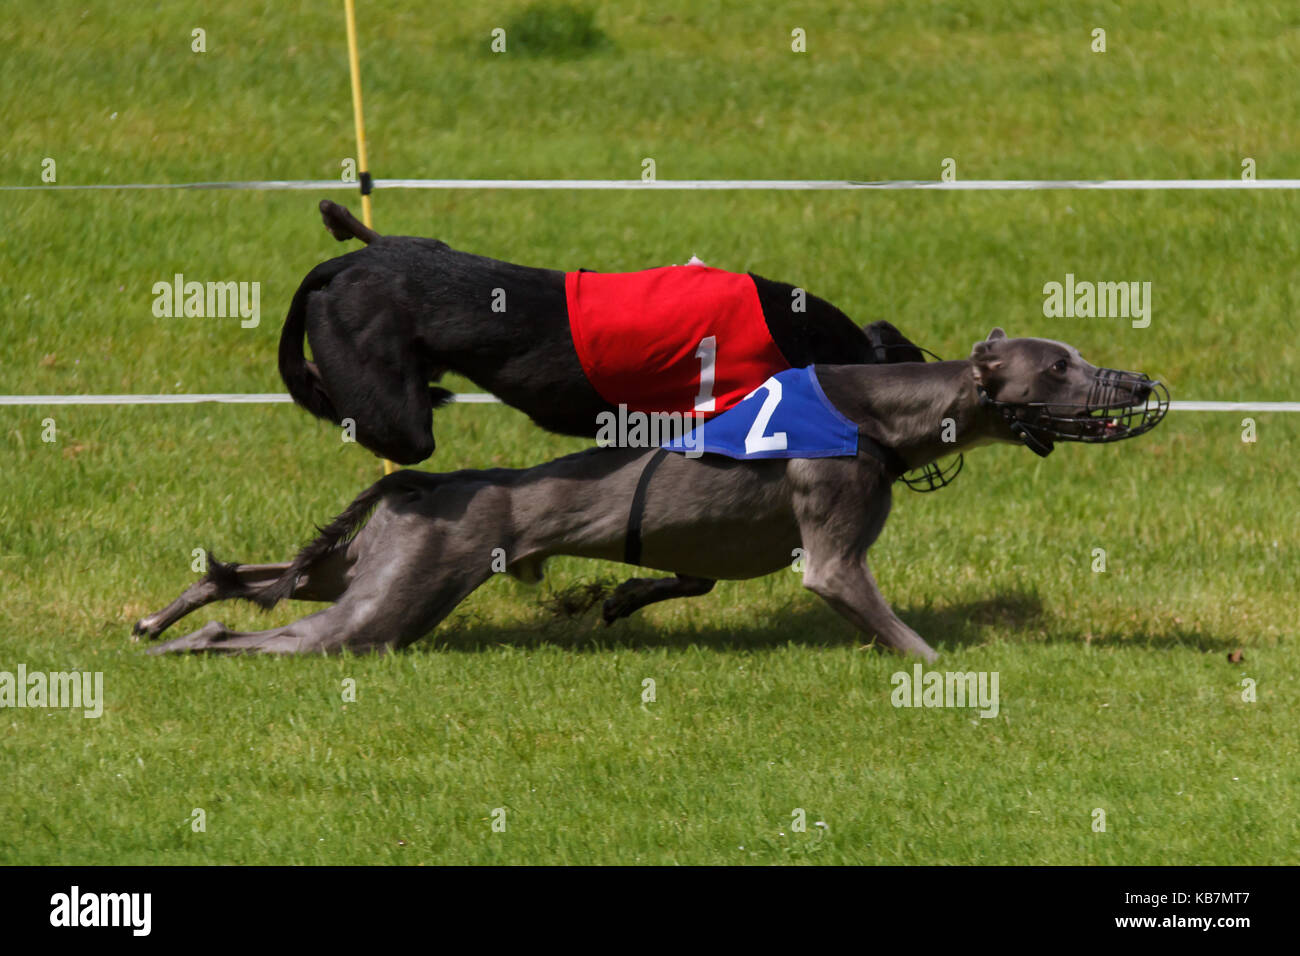 Collision between racing greyhounds Stock Photo